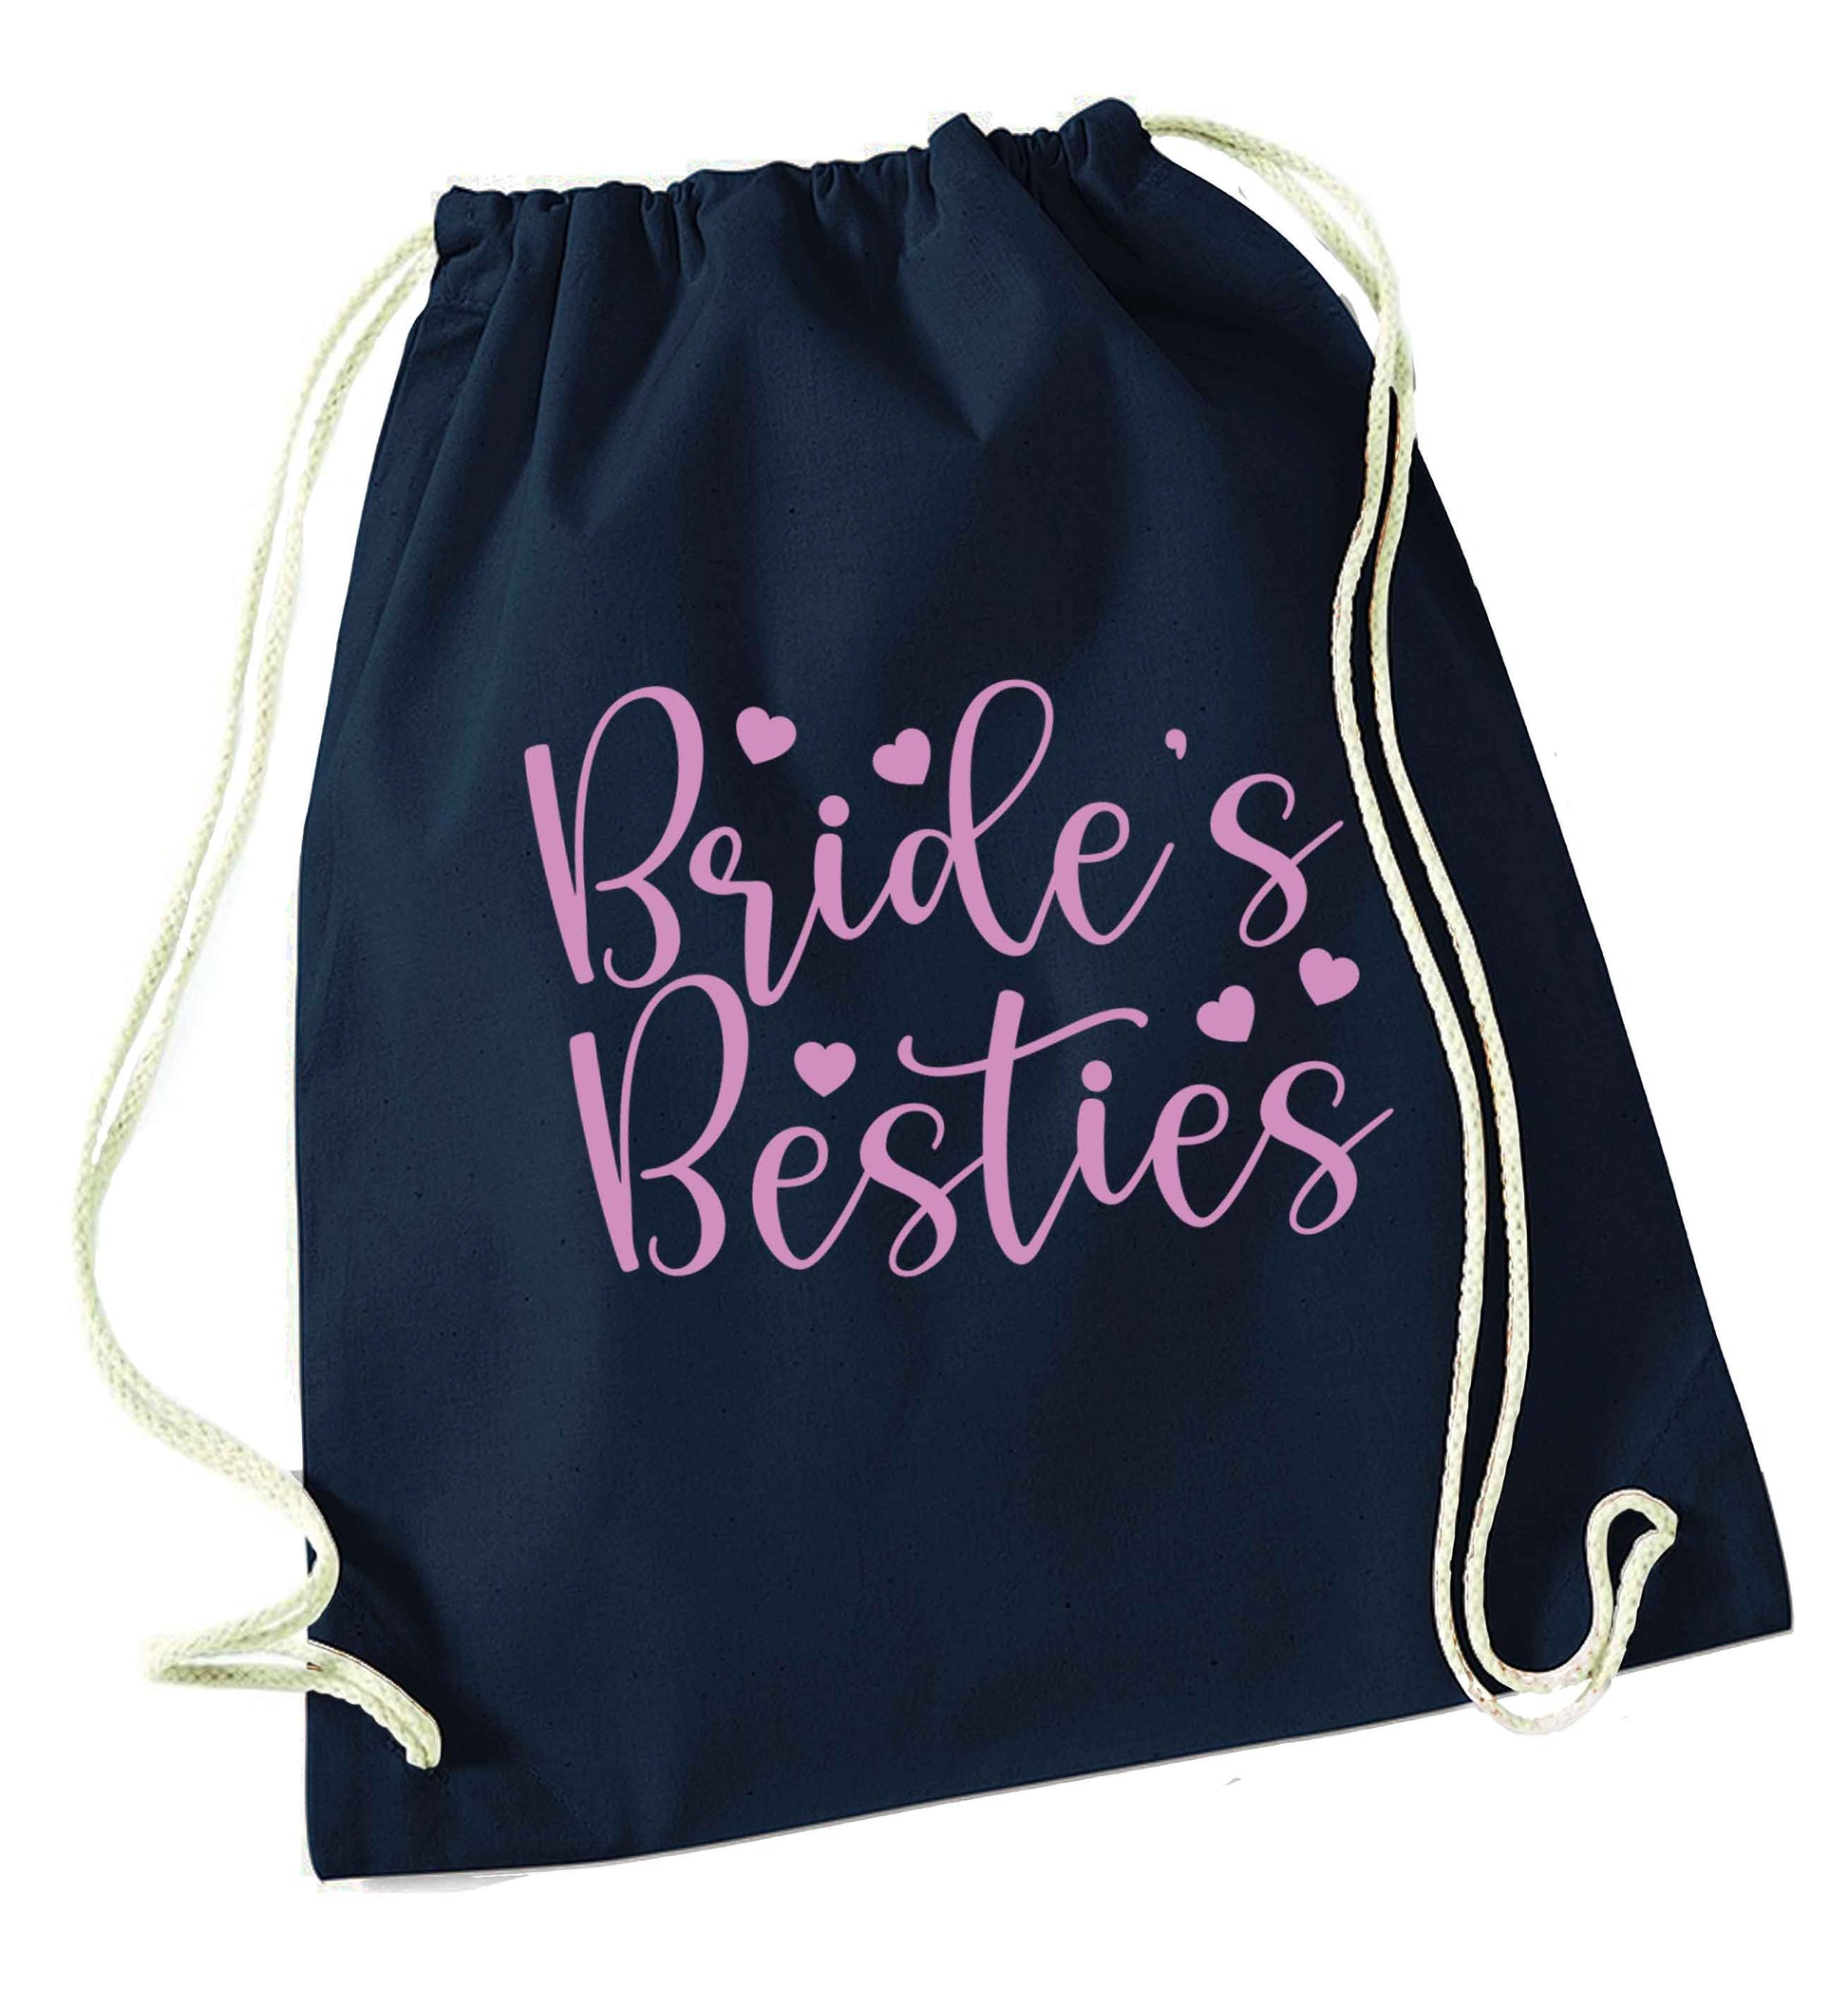 Brides besties navy drawstring bag